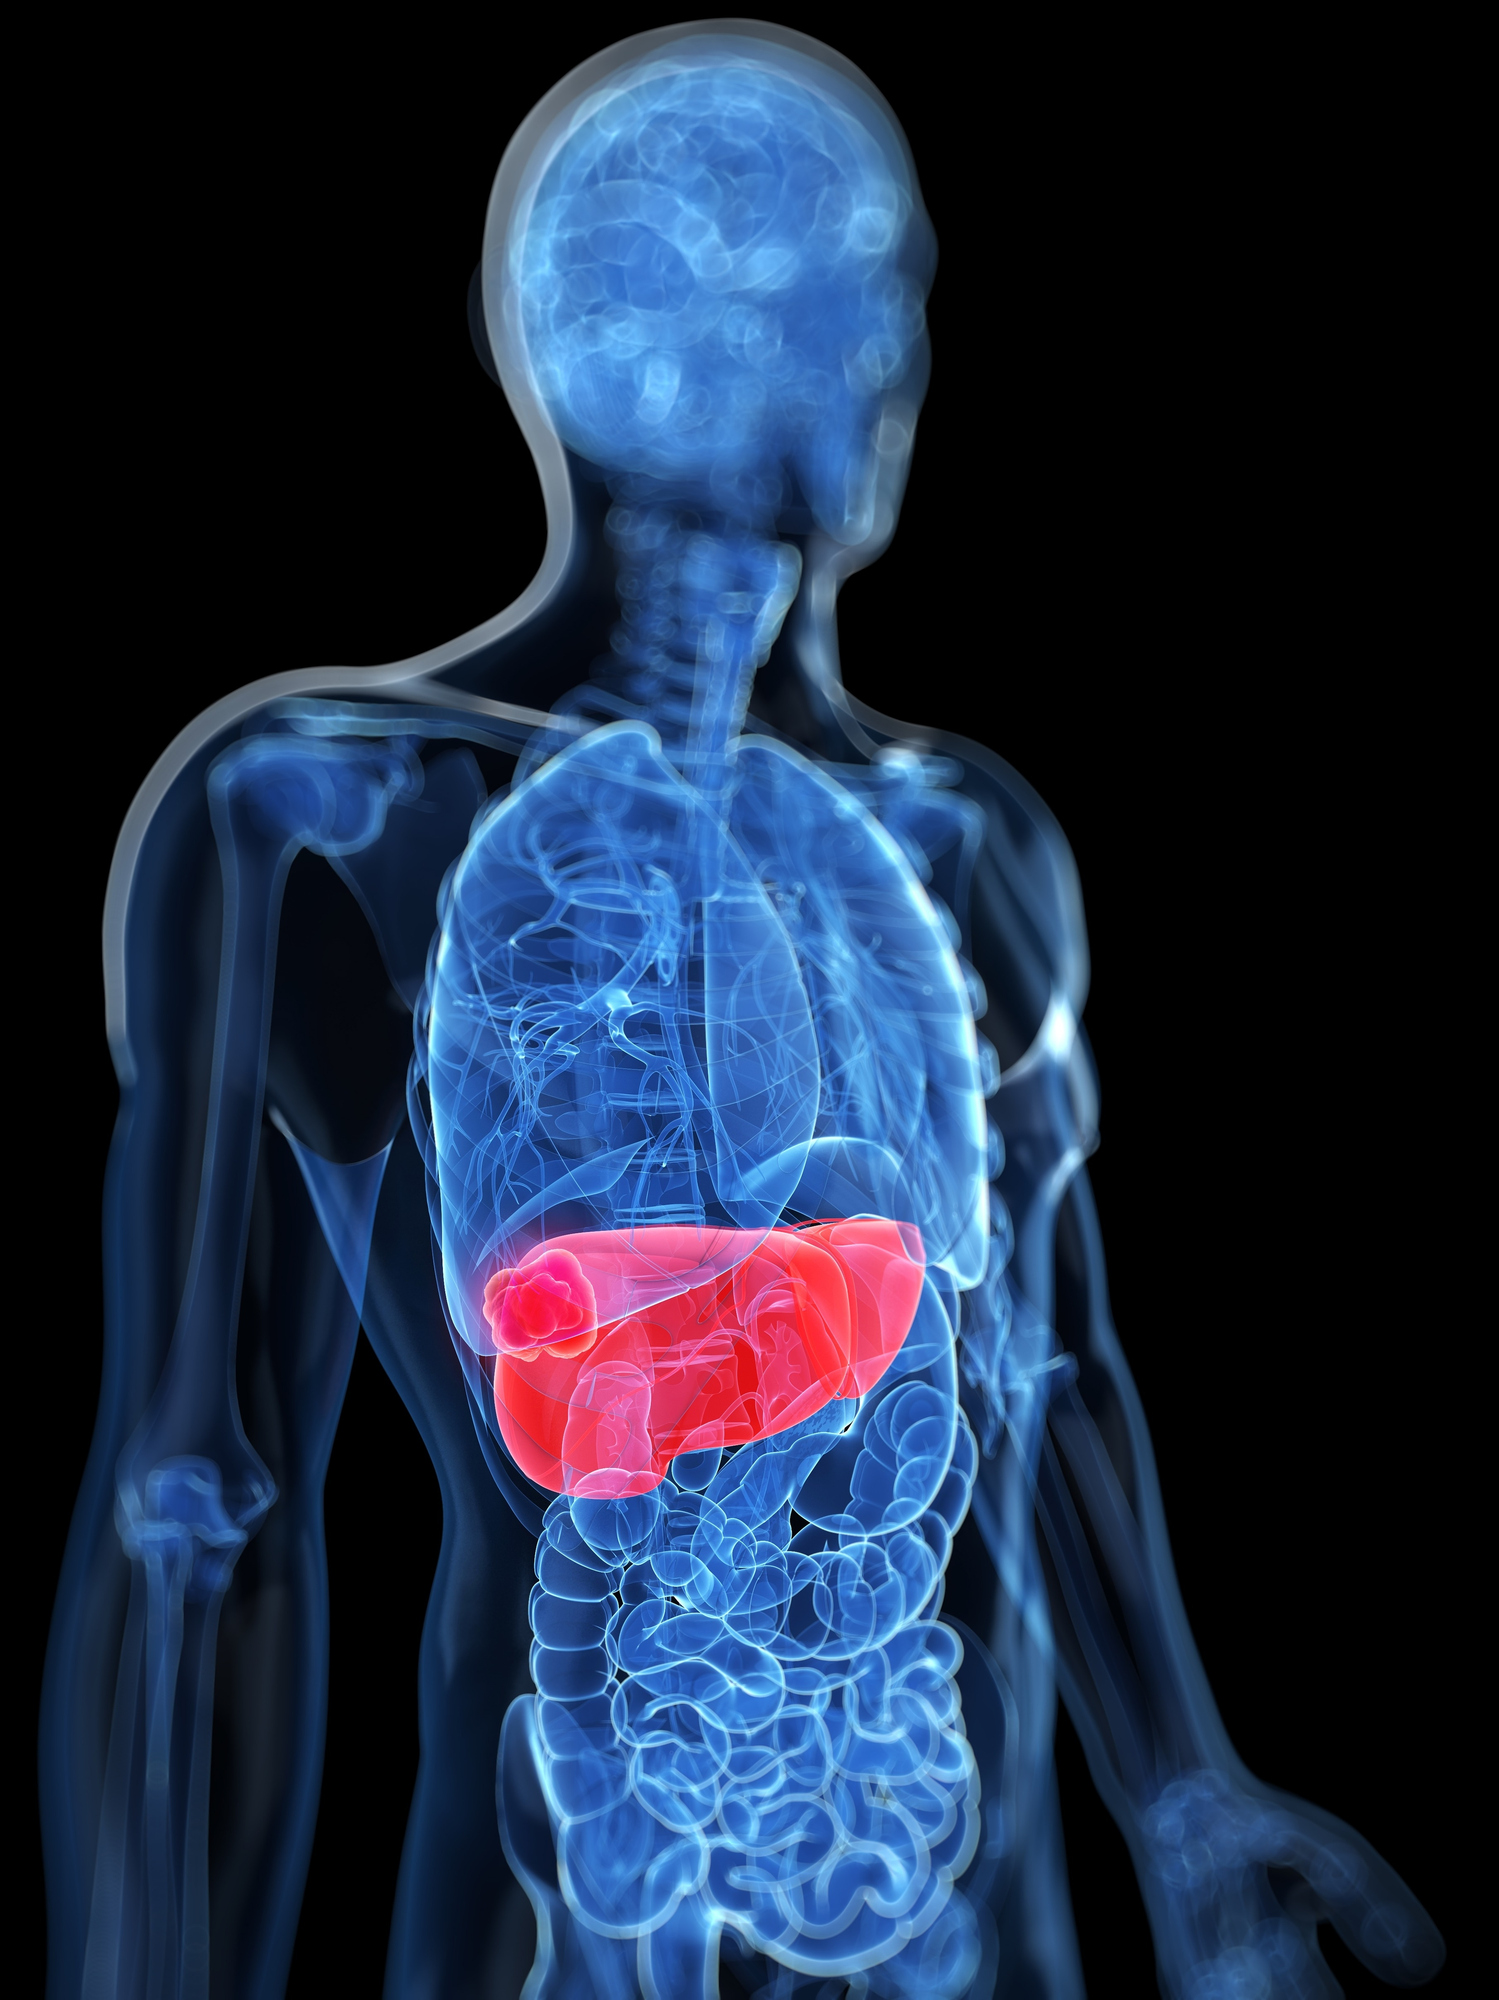 Fat fuels liver cancer cells - Cosmos Magazine